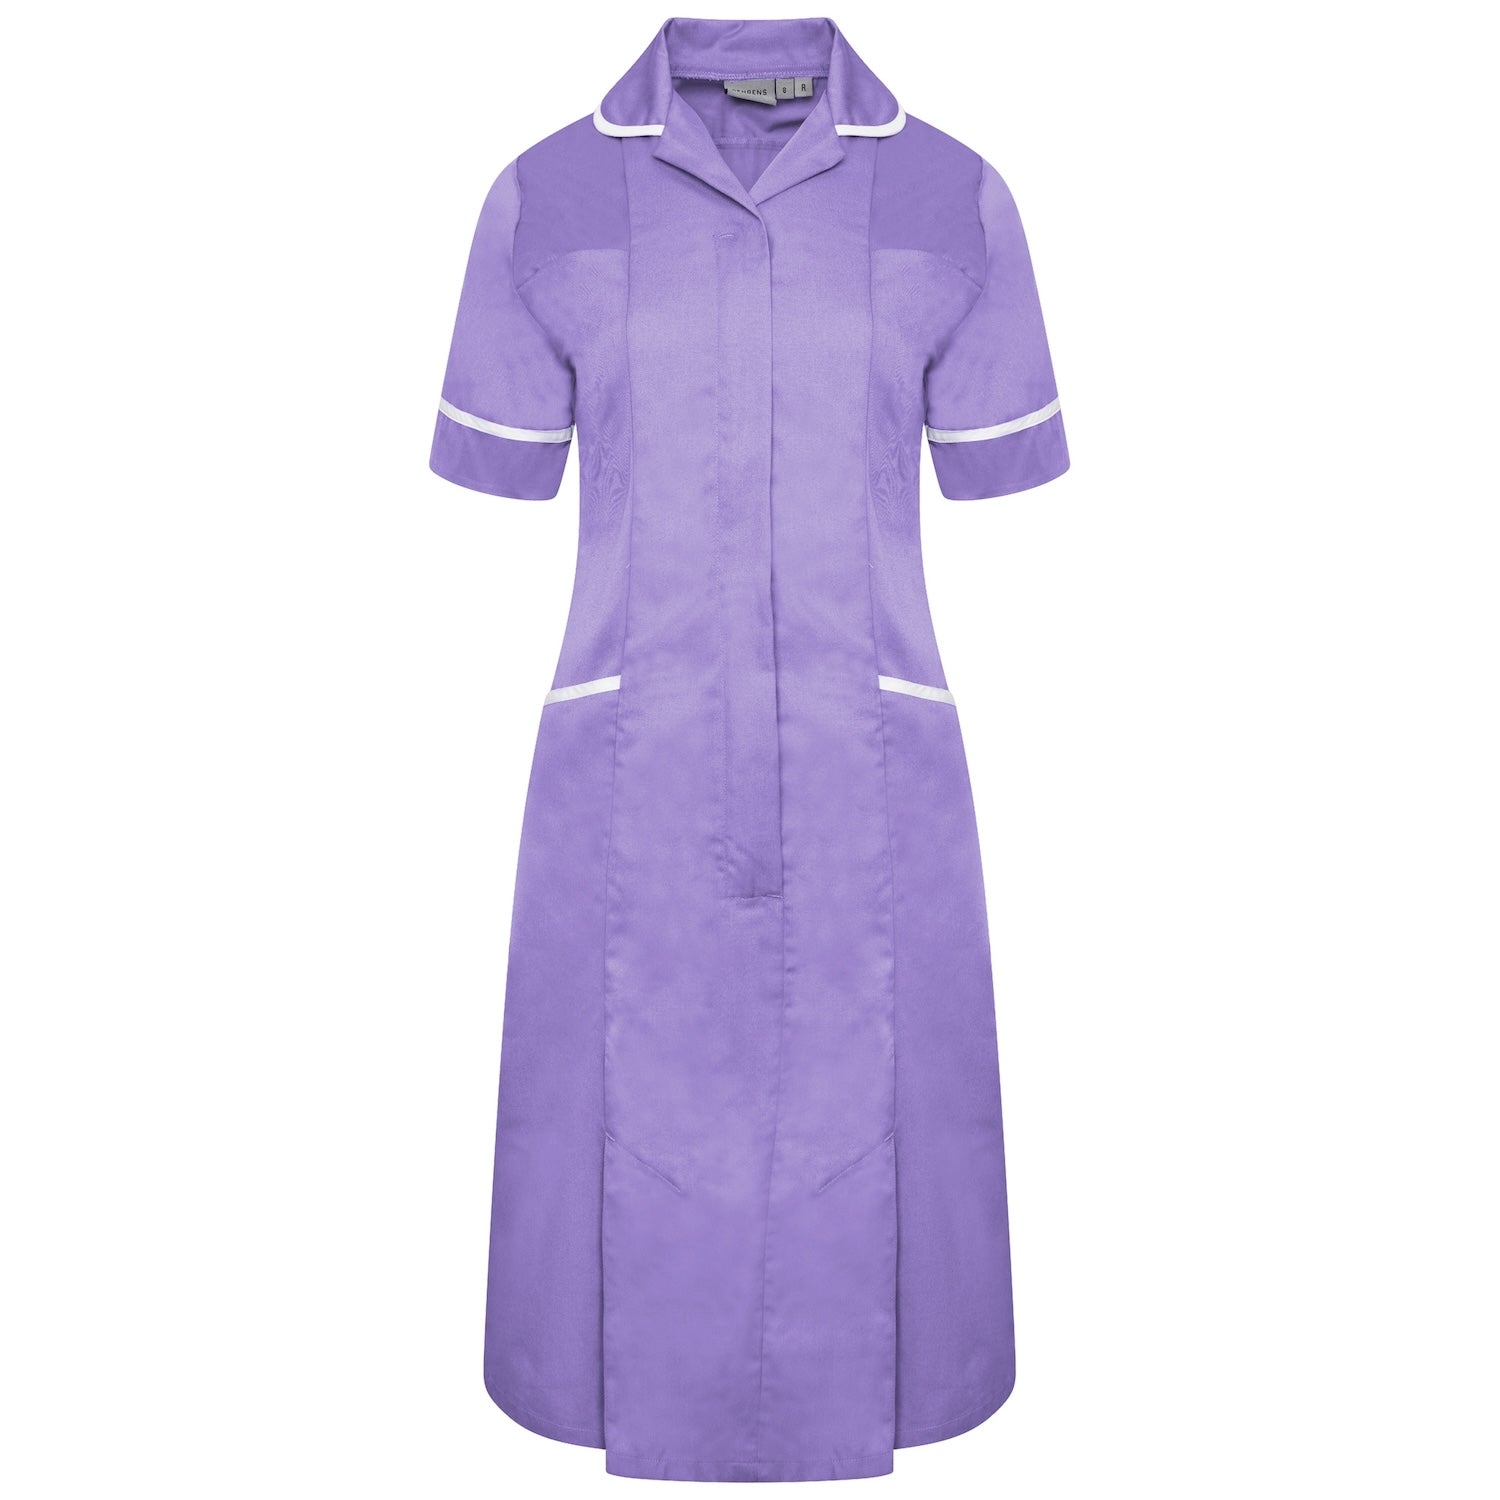 Ladies Healthcare Dress | Round Collar | Lilac/White Trim